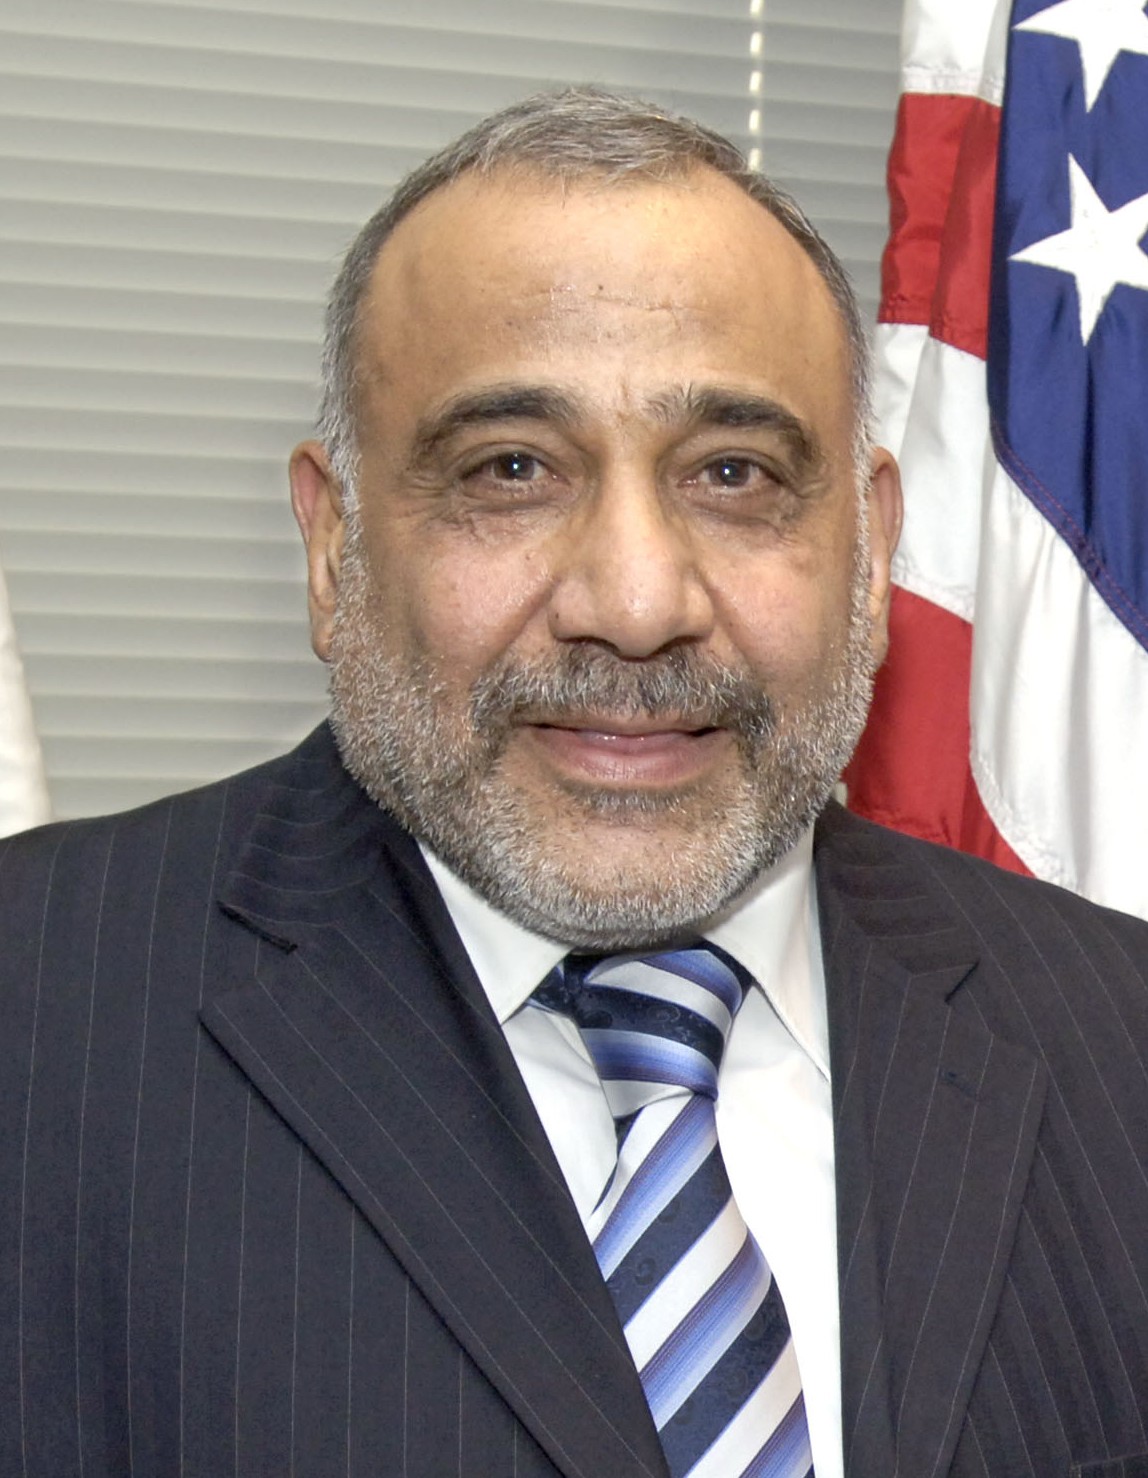 Iraqi PM Abdul Mahdi discusses recent protests in phone call with U.S. Secretary of State Pompeo